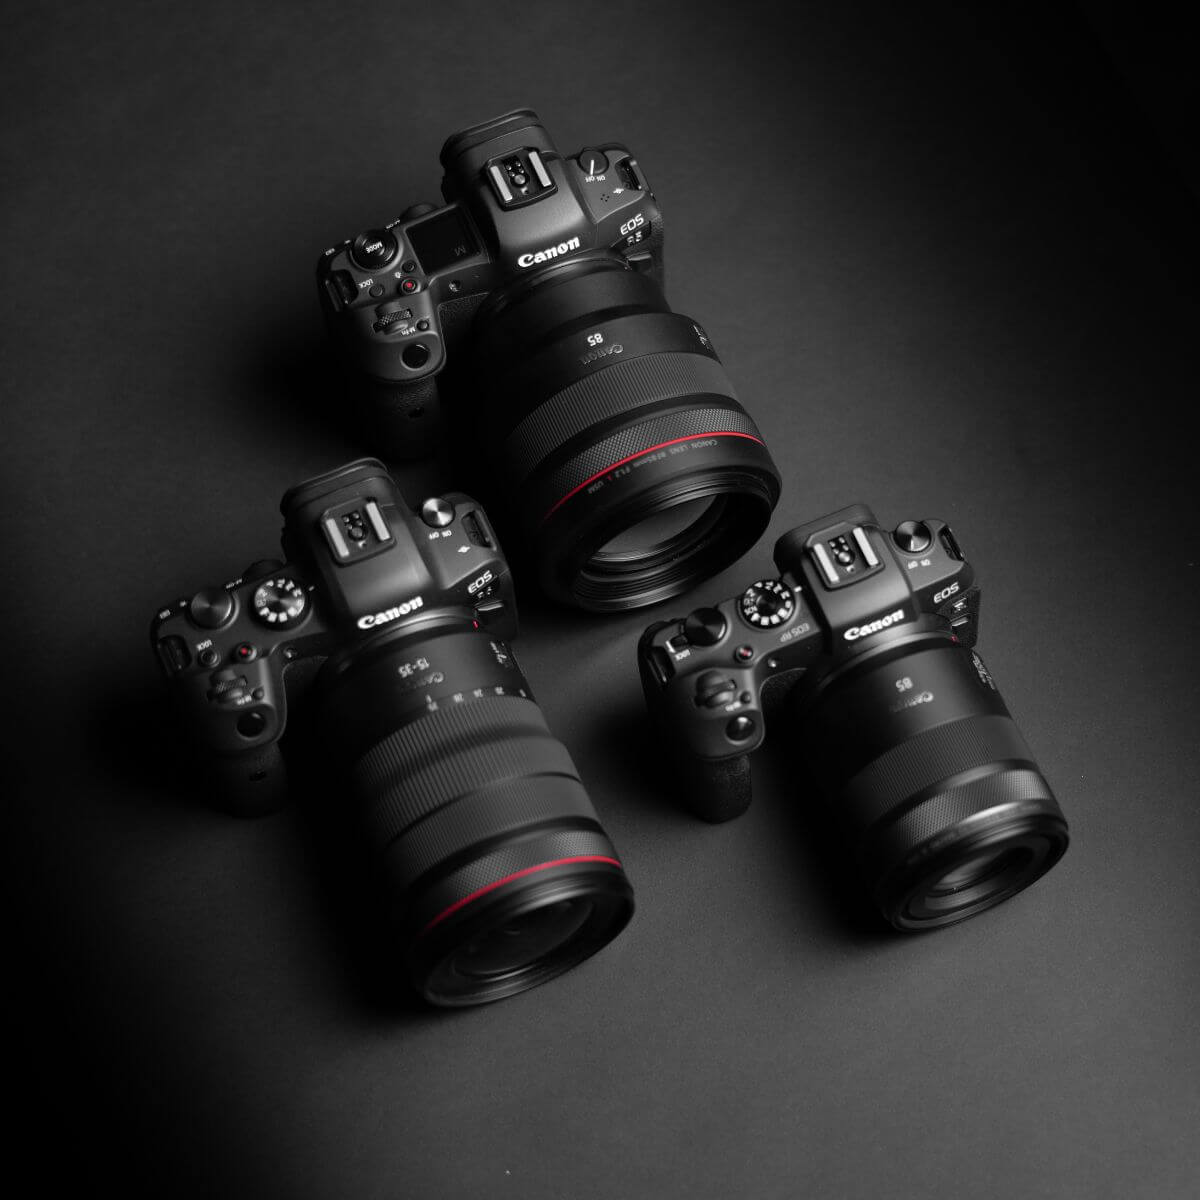 EOS cameras with RF lenses